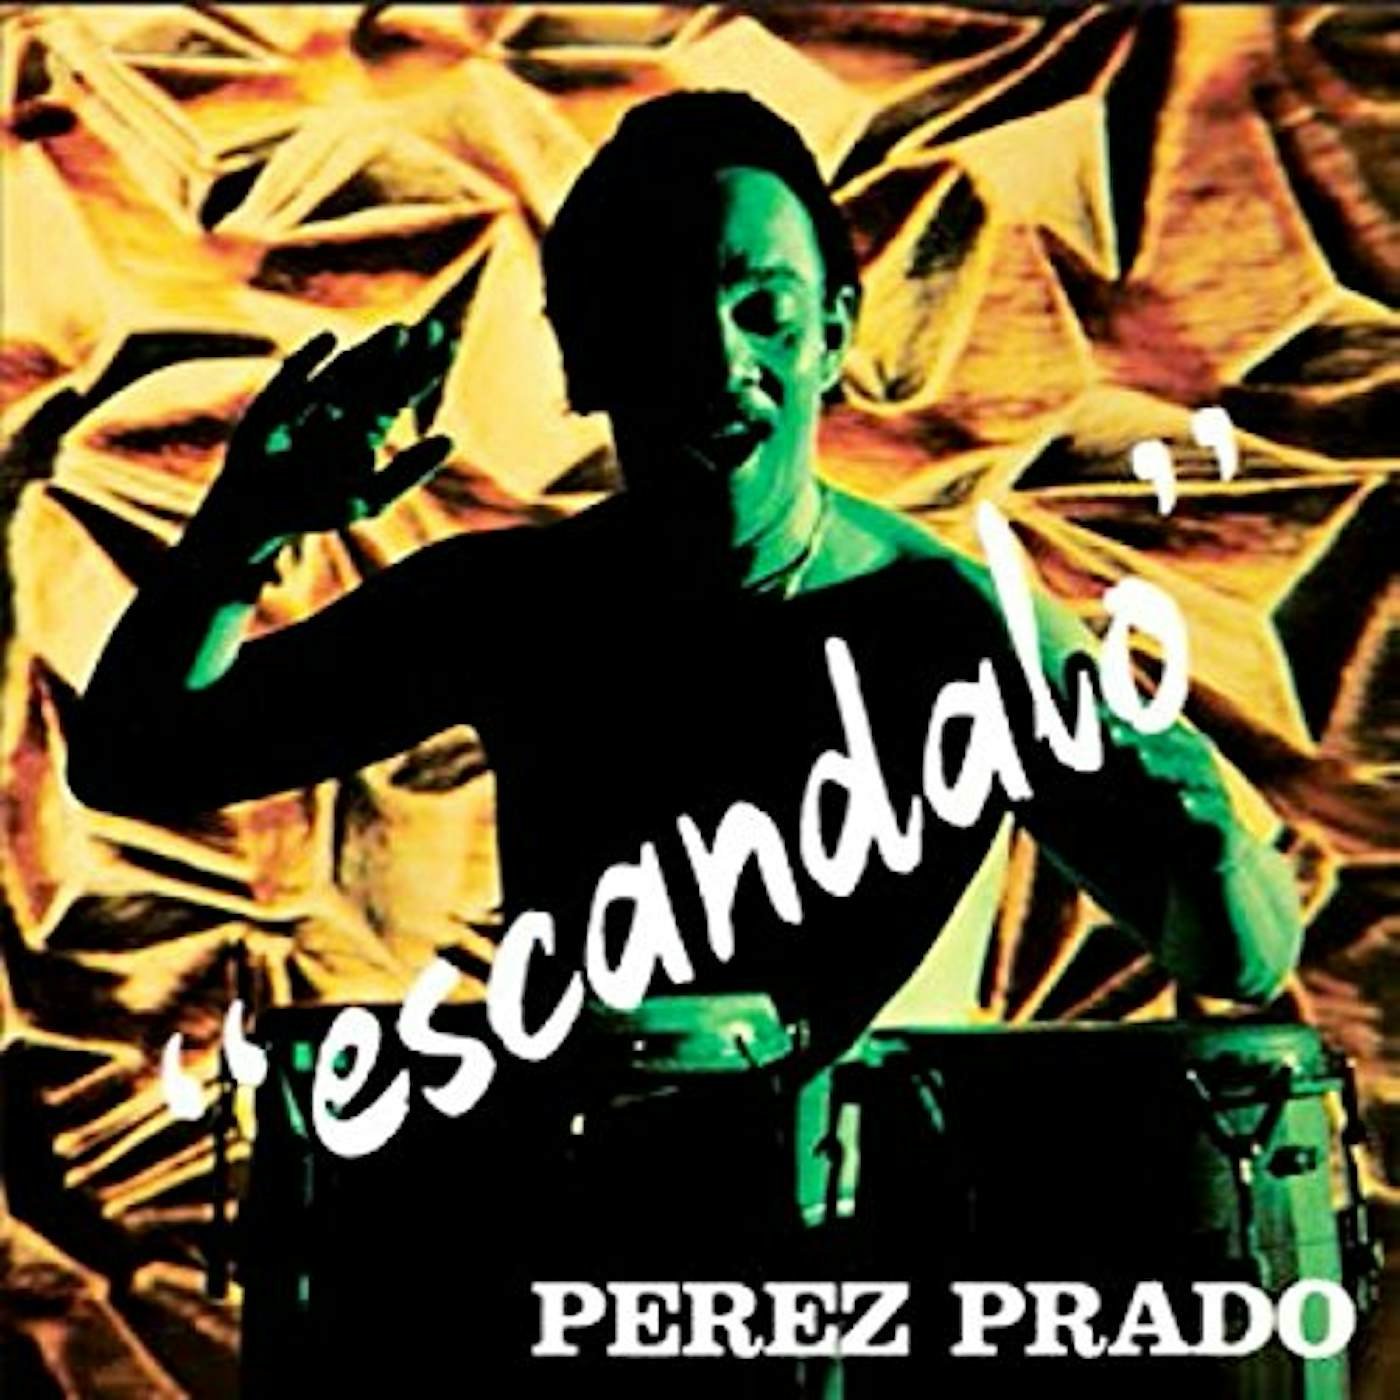 Pérez Prado ESCANDALO Vinyl Record - UK Release